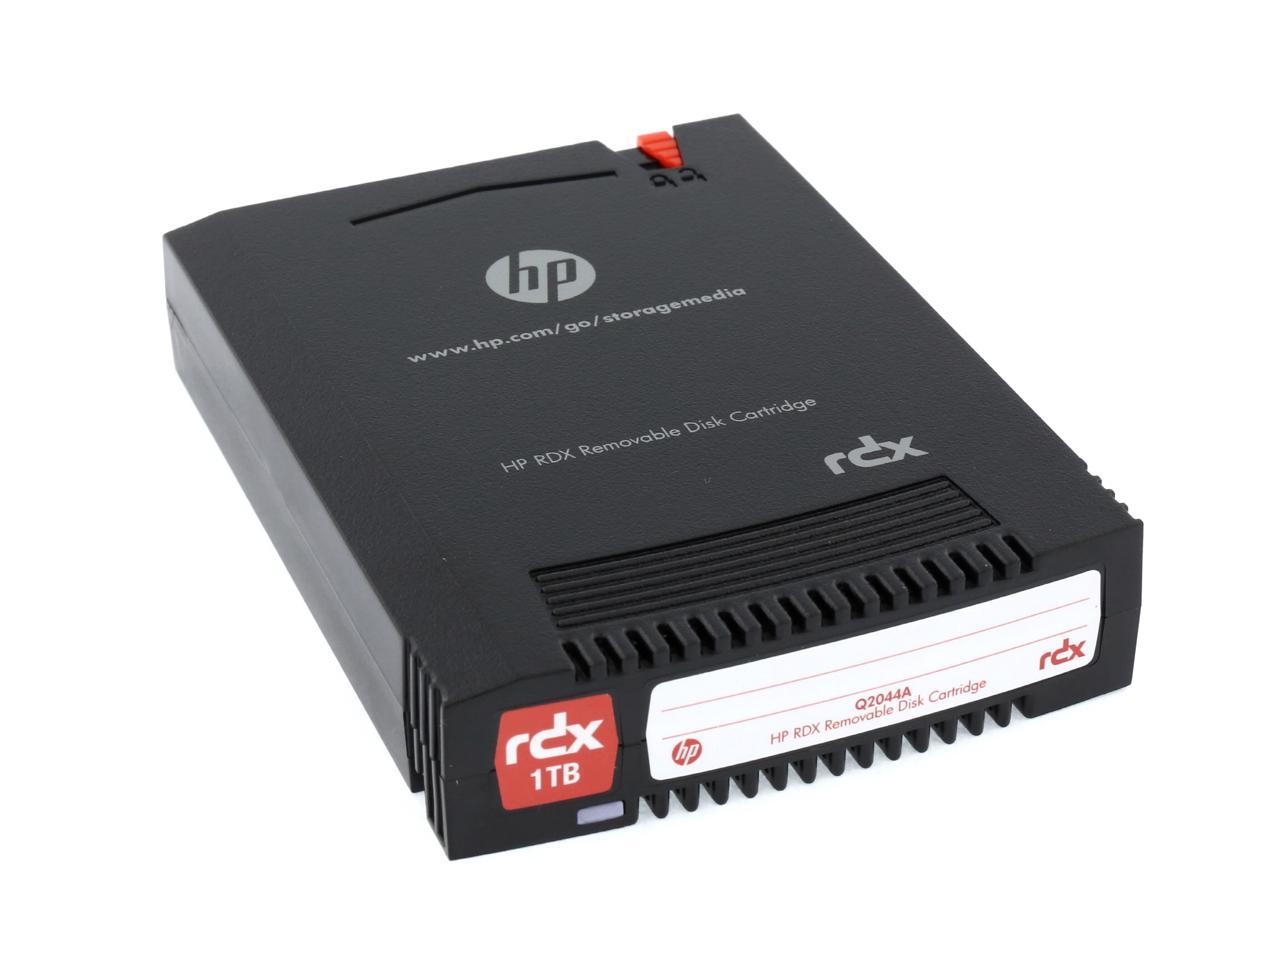 HP Q2044A RDX RDX 1TB Removable Disk Cartridge - Newegg.ca